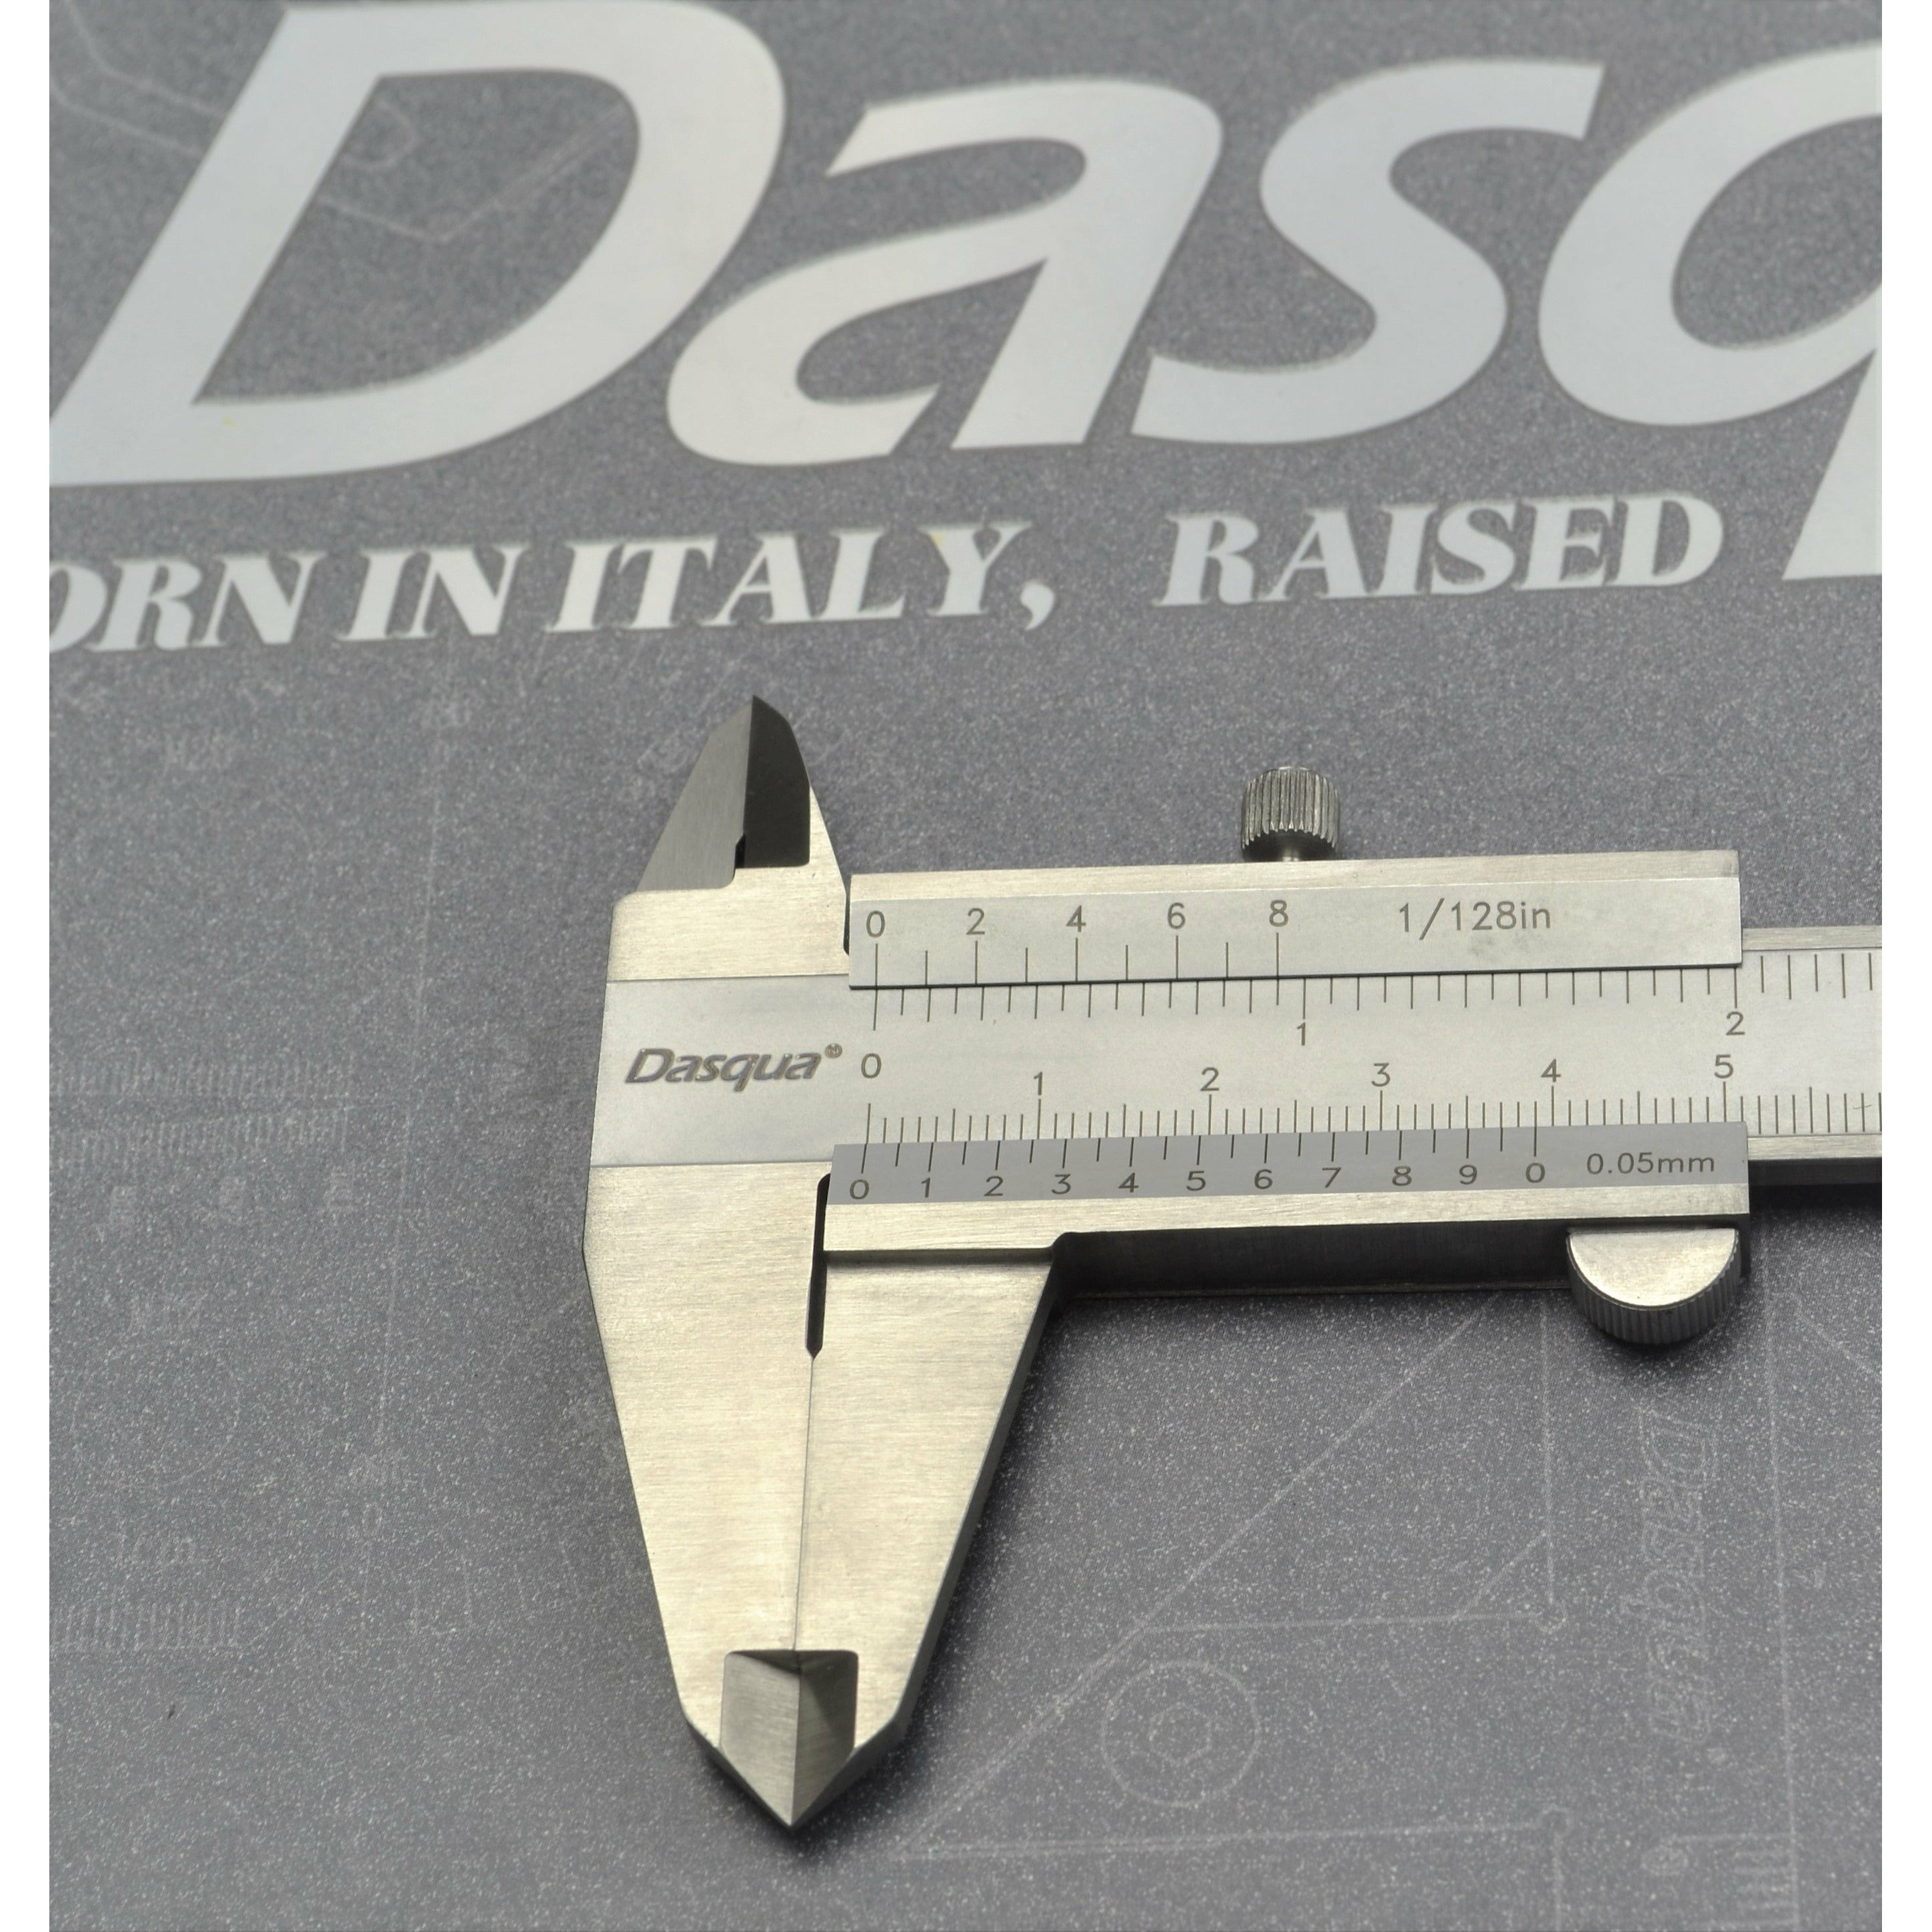  Dasqua Monoblock Vernier Caliper 0-150 mm/0-6" Series 1120-3115